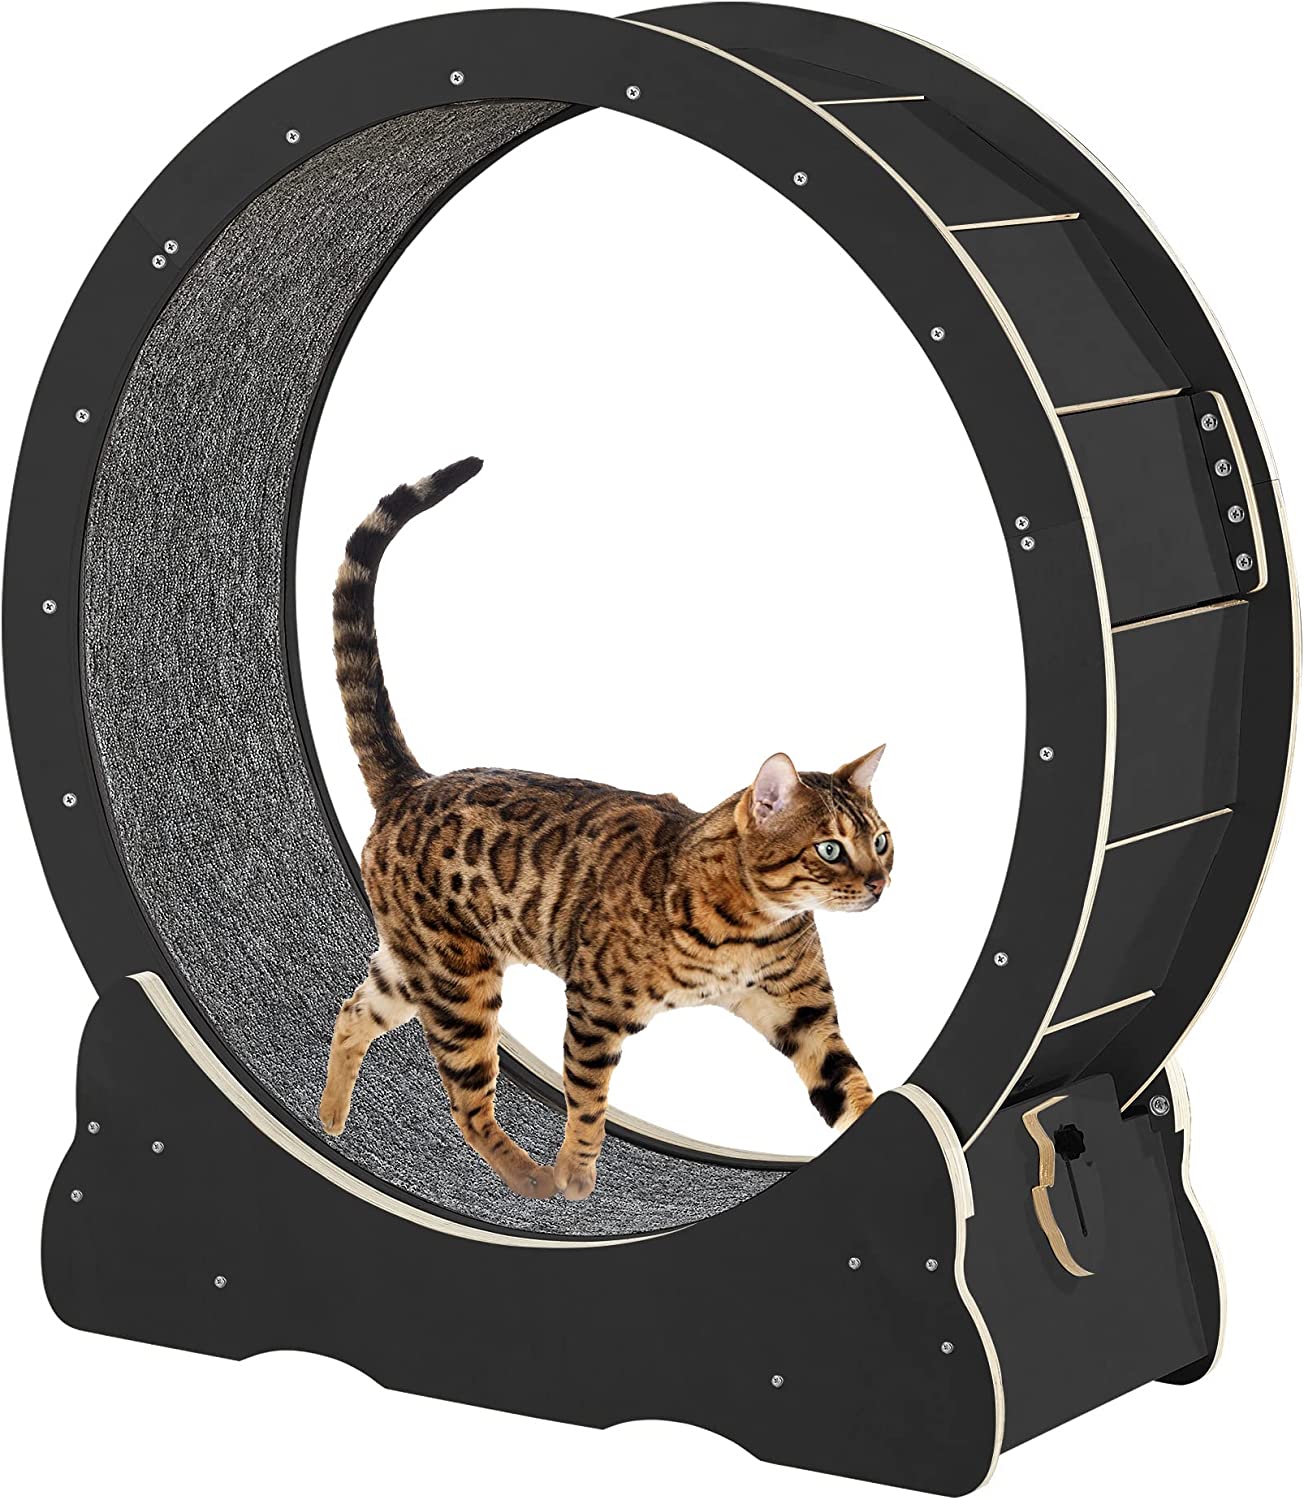 8. Smart Hacks Cat Exercise Wheel